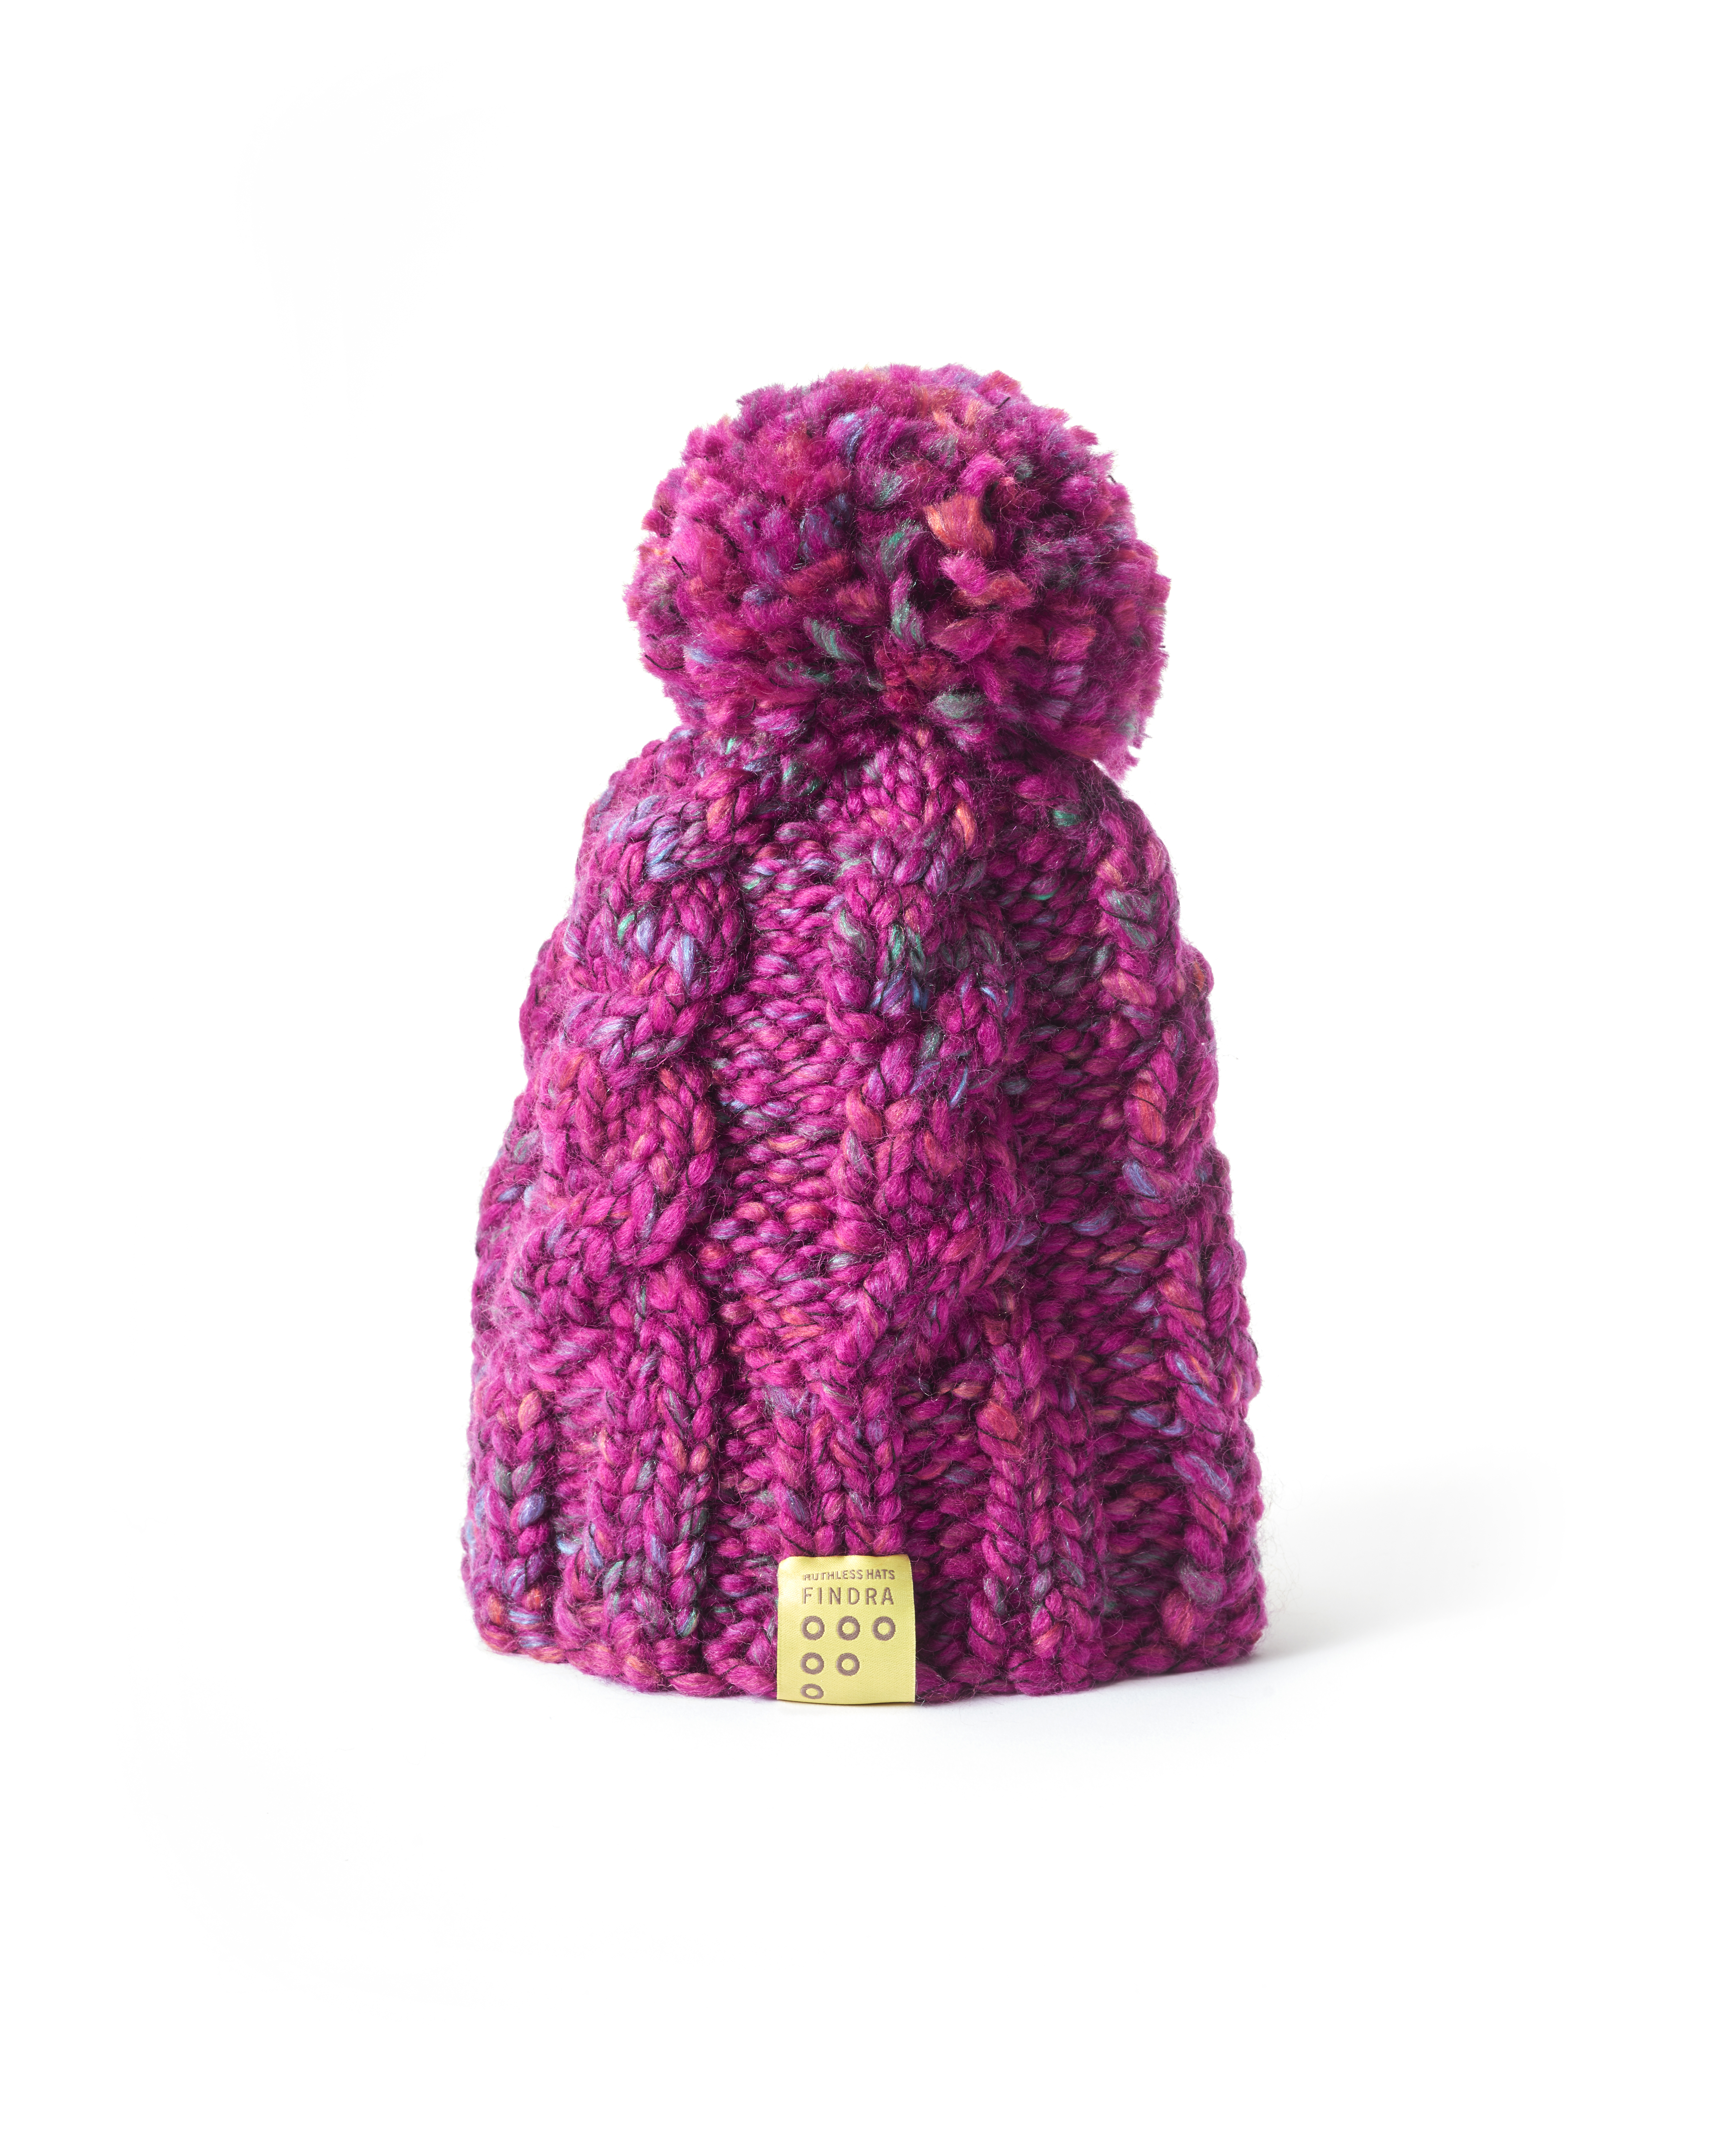 Bobble hat in Winter Rose, £35, FINDRA